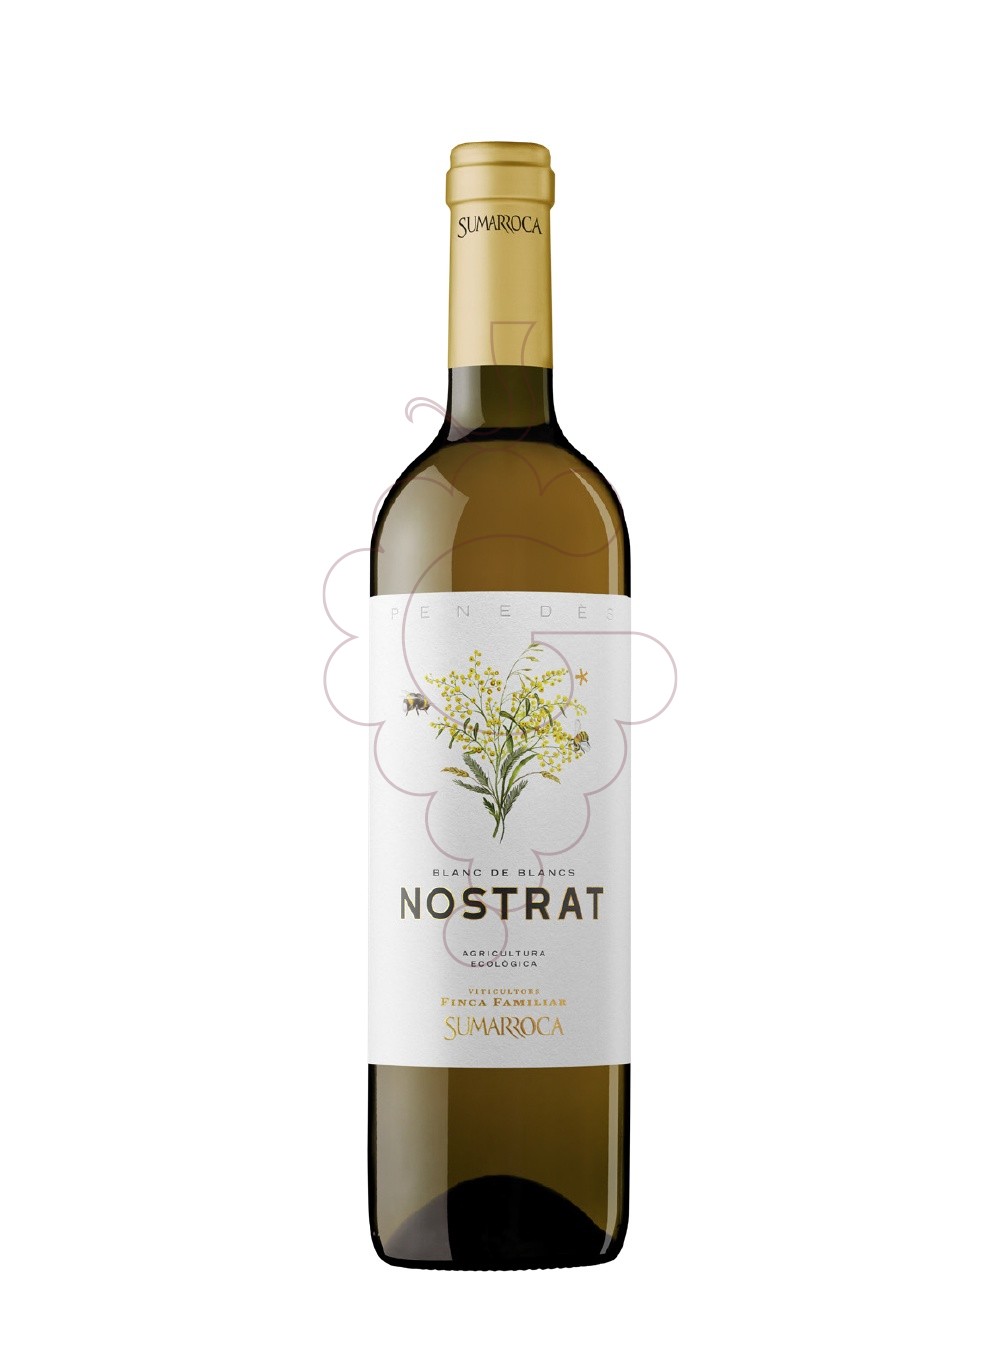 Photo Sumarroca Nostrat white wine